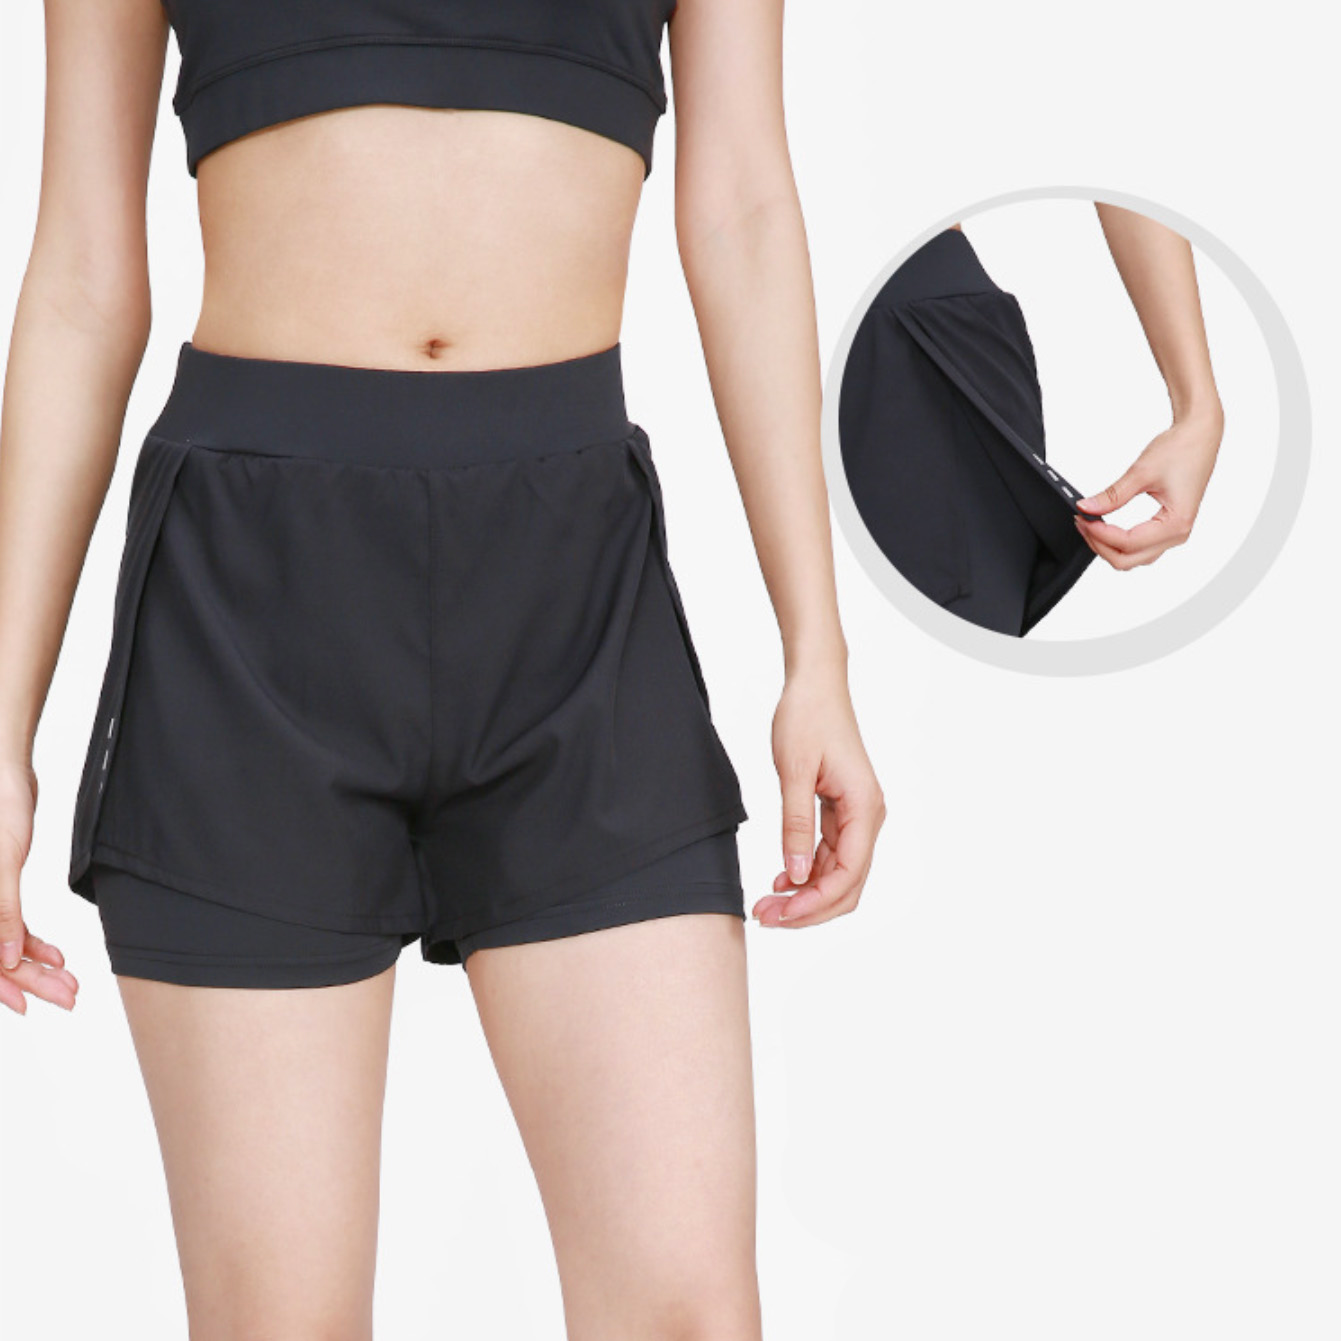 BeautyTrend Women's fitness shorts three-point pants high waist running  sports yoga pants